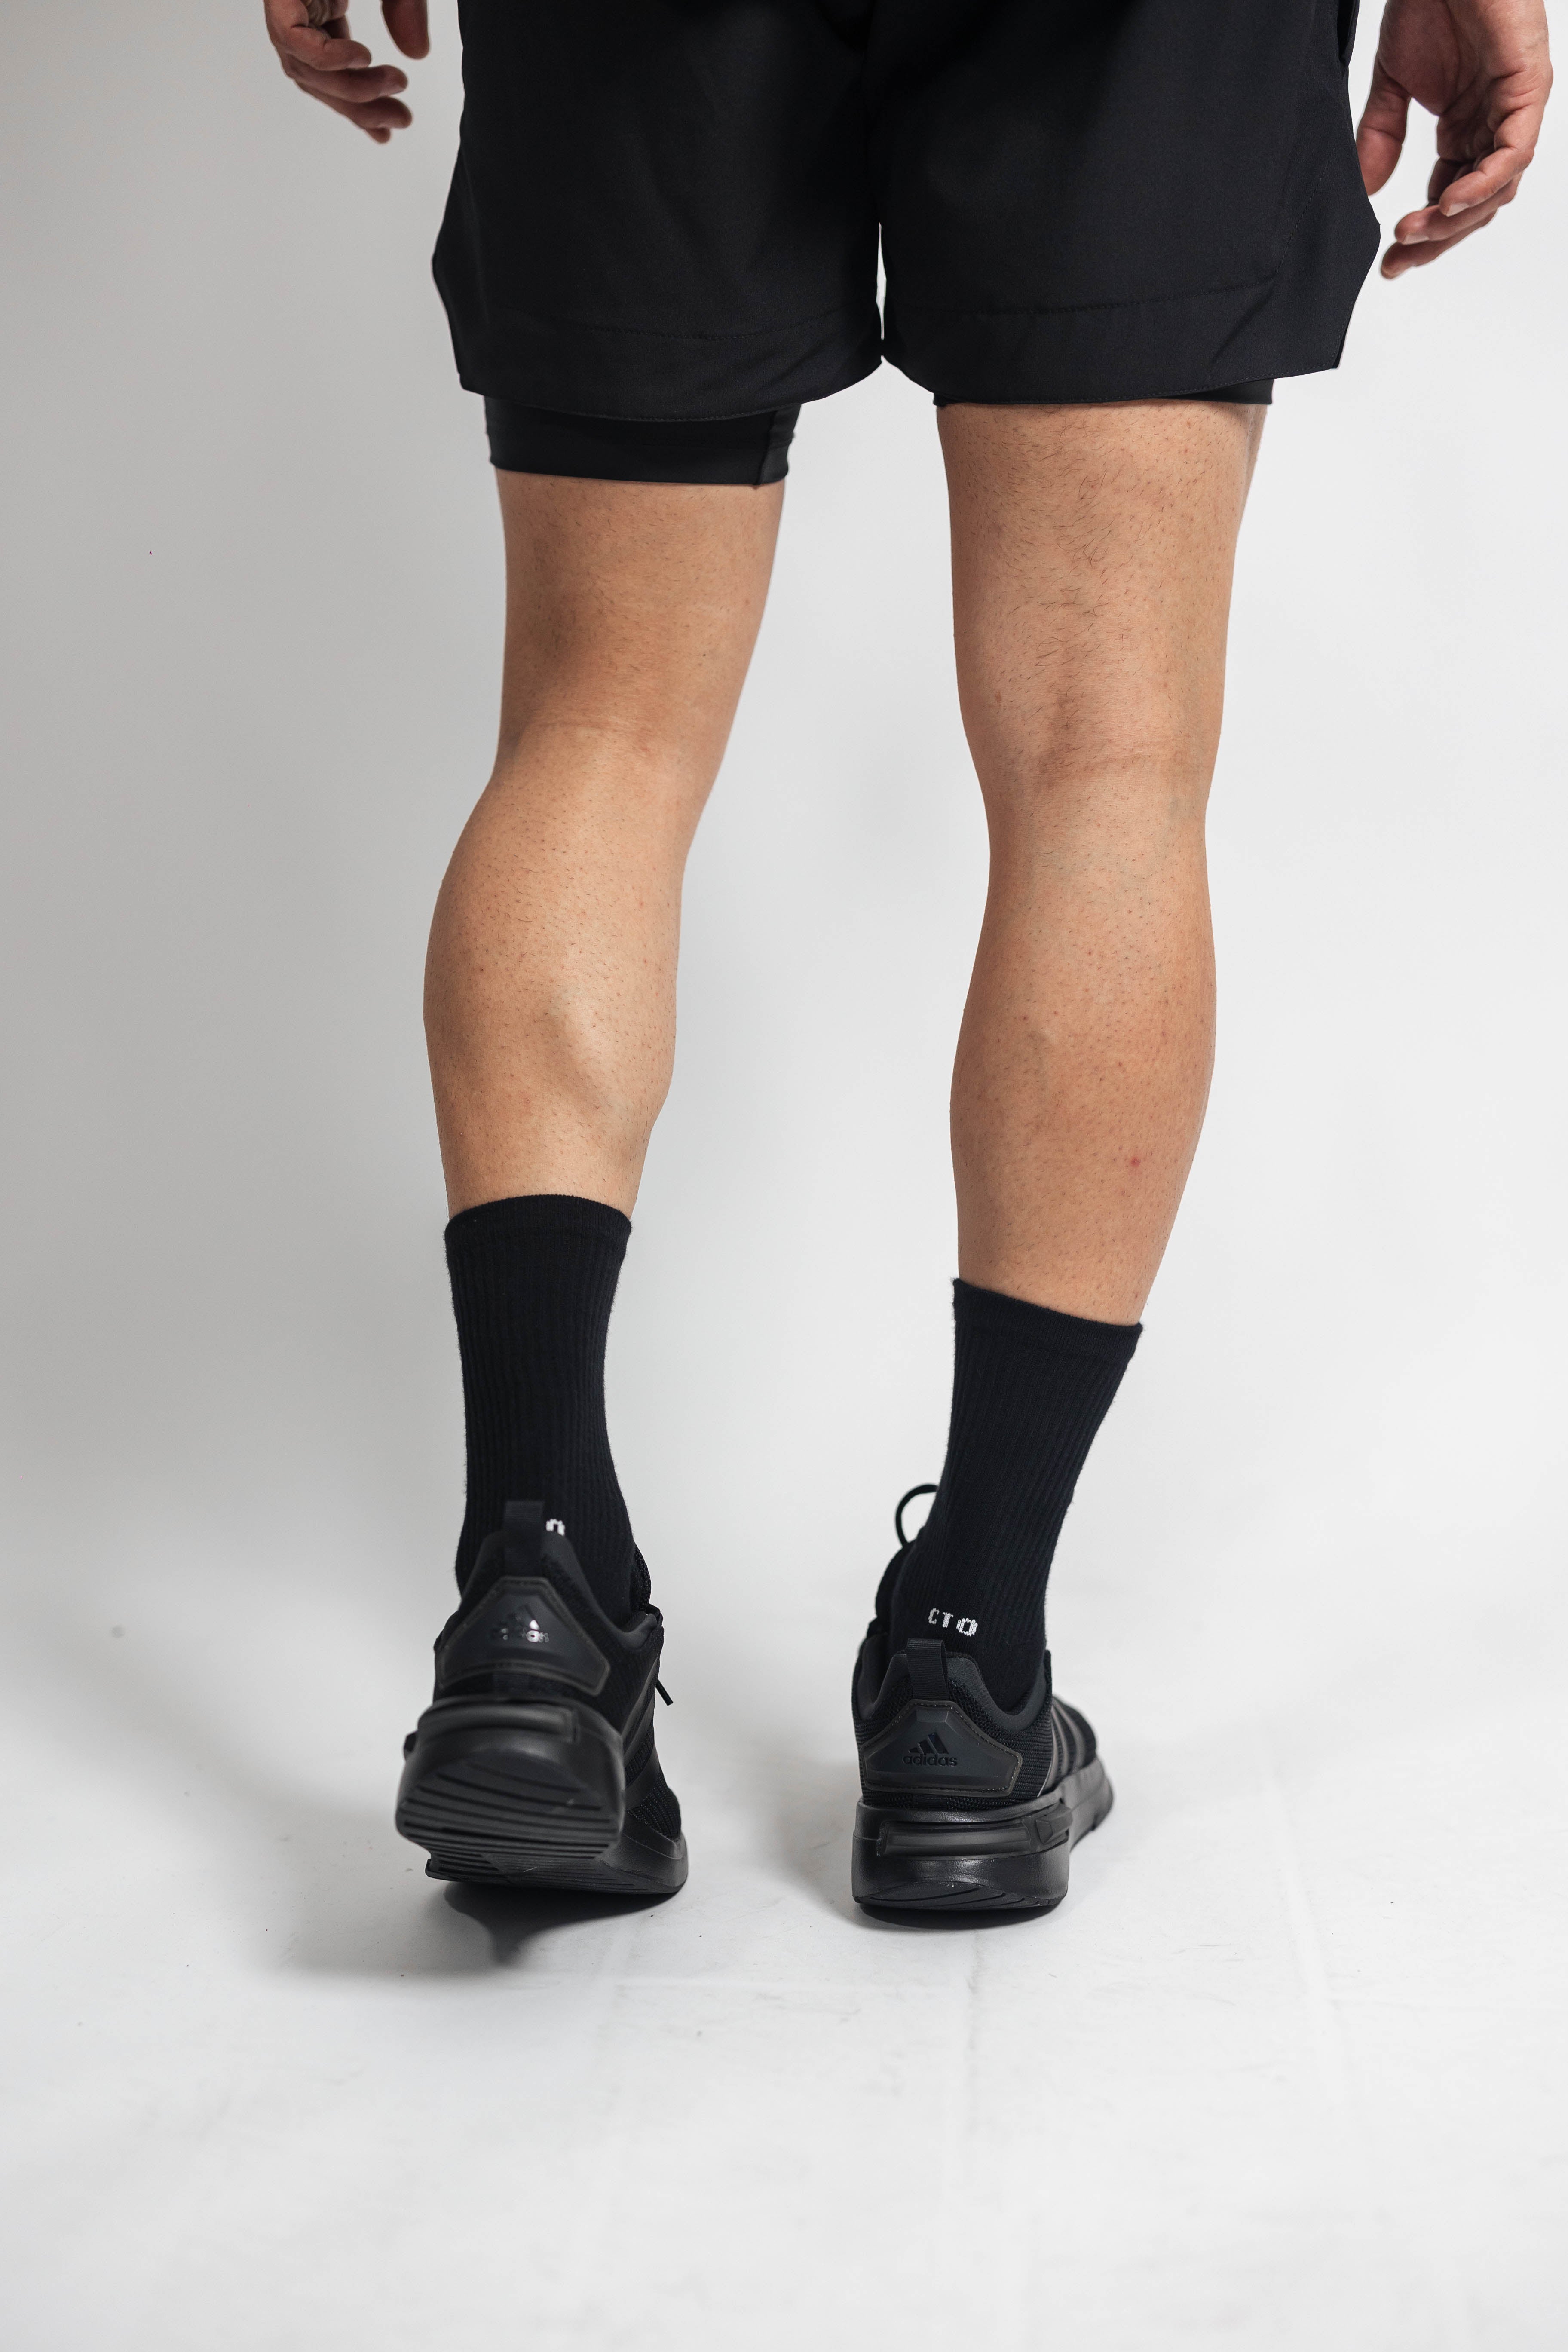 Comfort Socks MDL 003 - Black